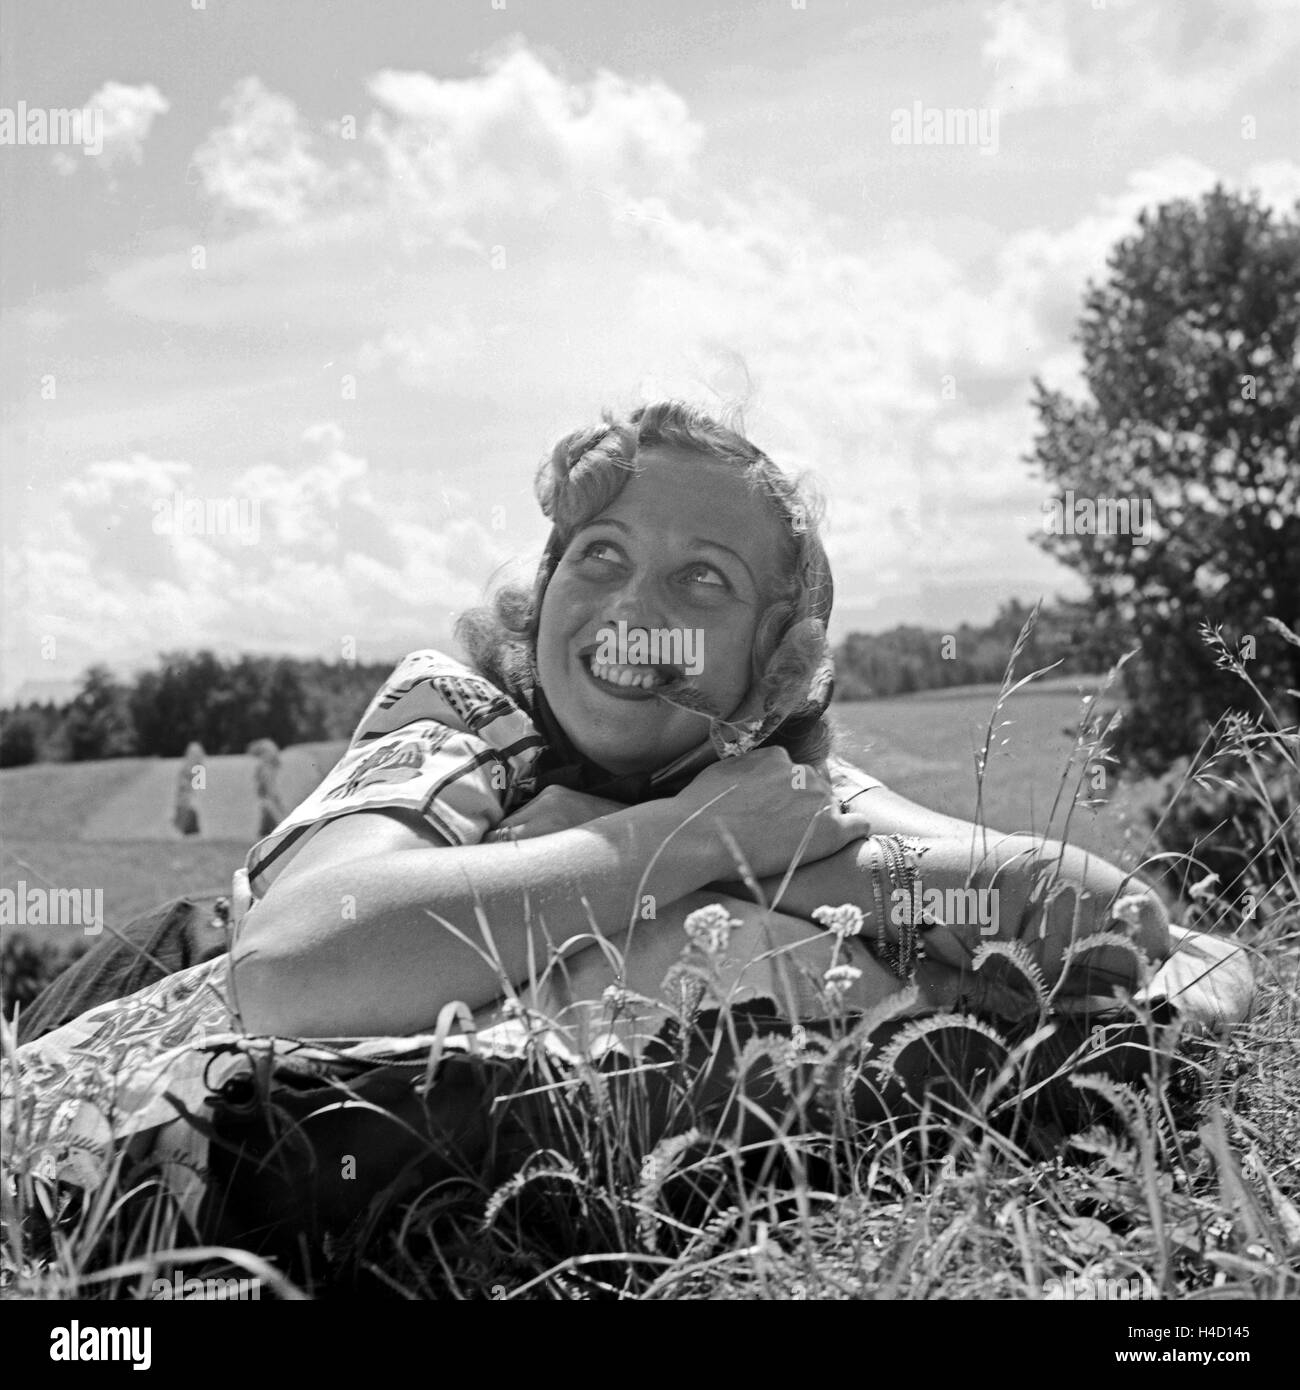 Eine junge Frau liegt lachen en einer Wiese, Deutschland 1930er Jahre. Una mujer joven acostado en el pasto, sonriente, Alemania 1930. Foto de stock